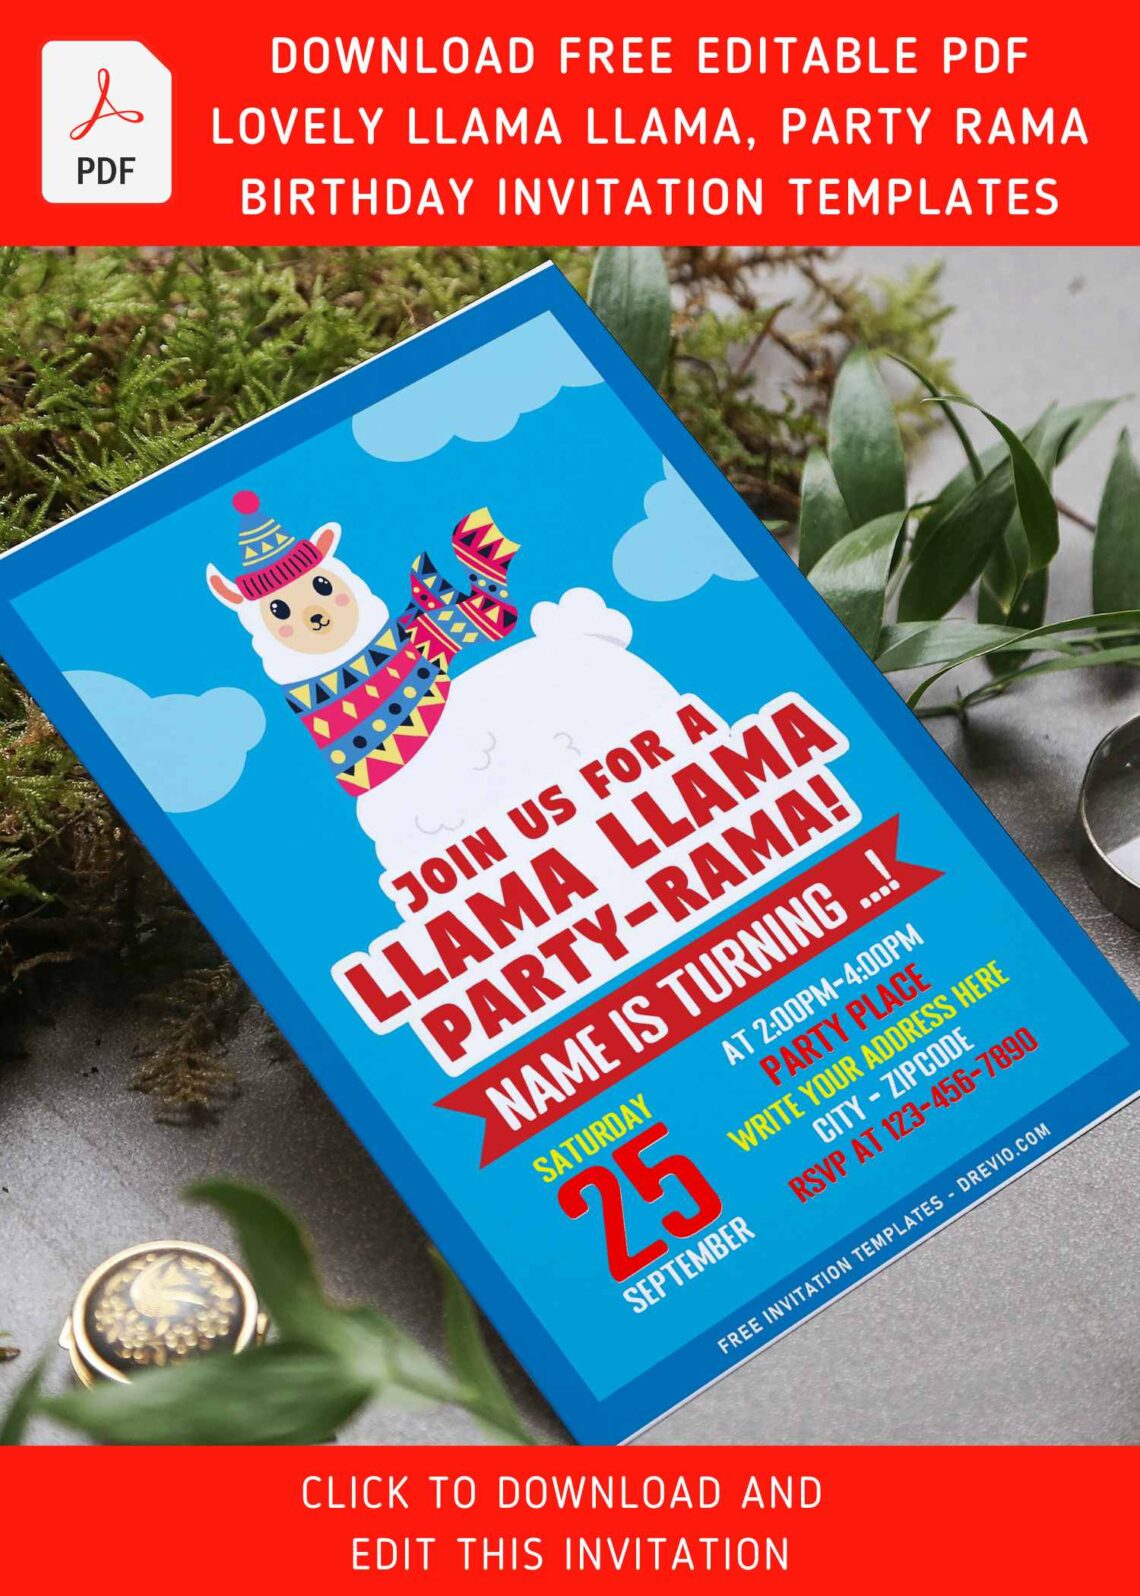 (Free Editable PDF) Lovely Llama Party-Rama Birthday Invitation Templates with lovable llama